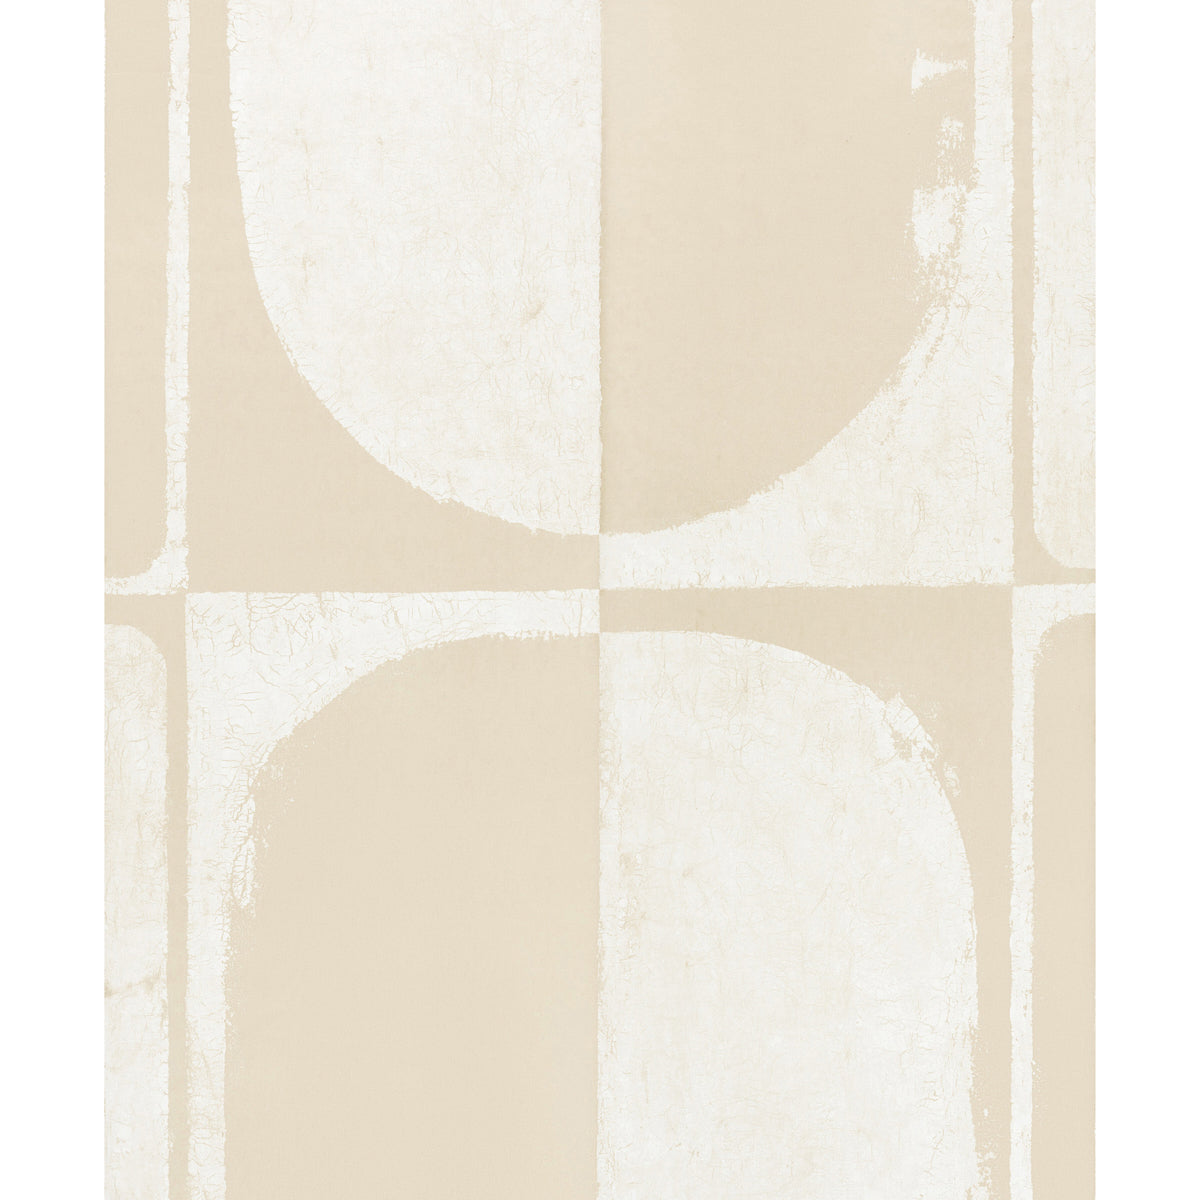 Purchase 5014900 | The Cloisters Panel Set, Warm White - Schumacher Wallpaper